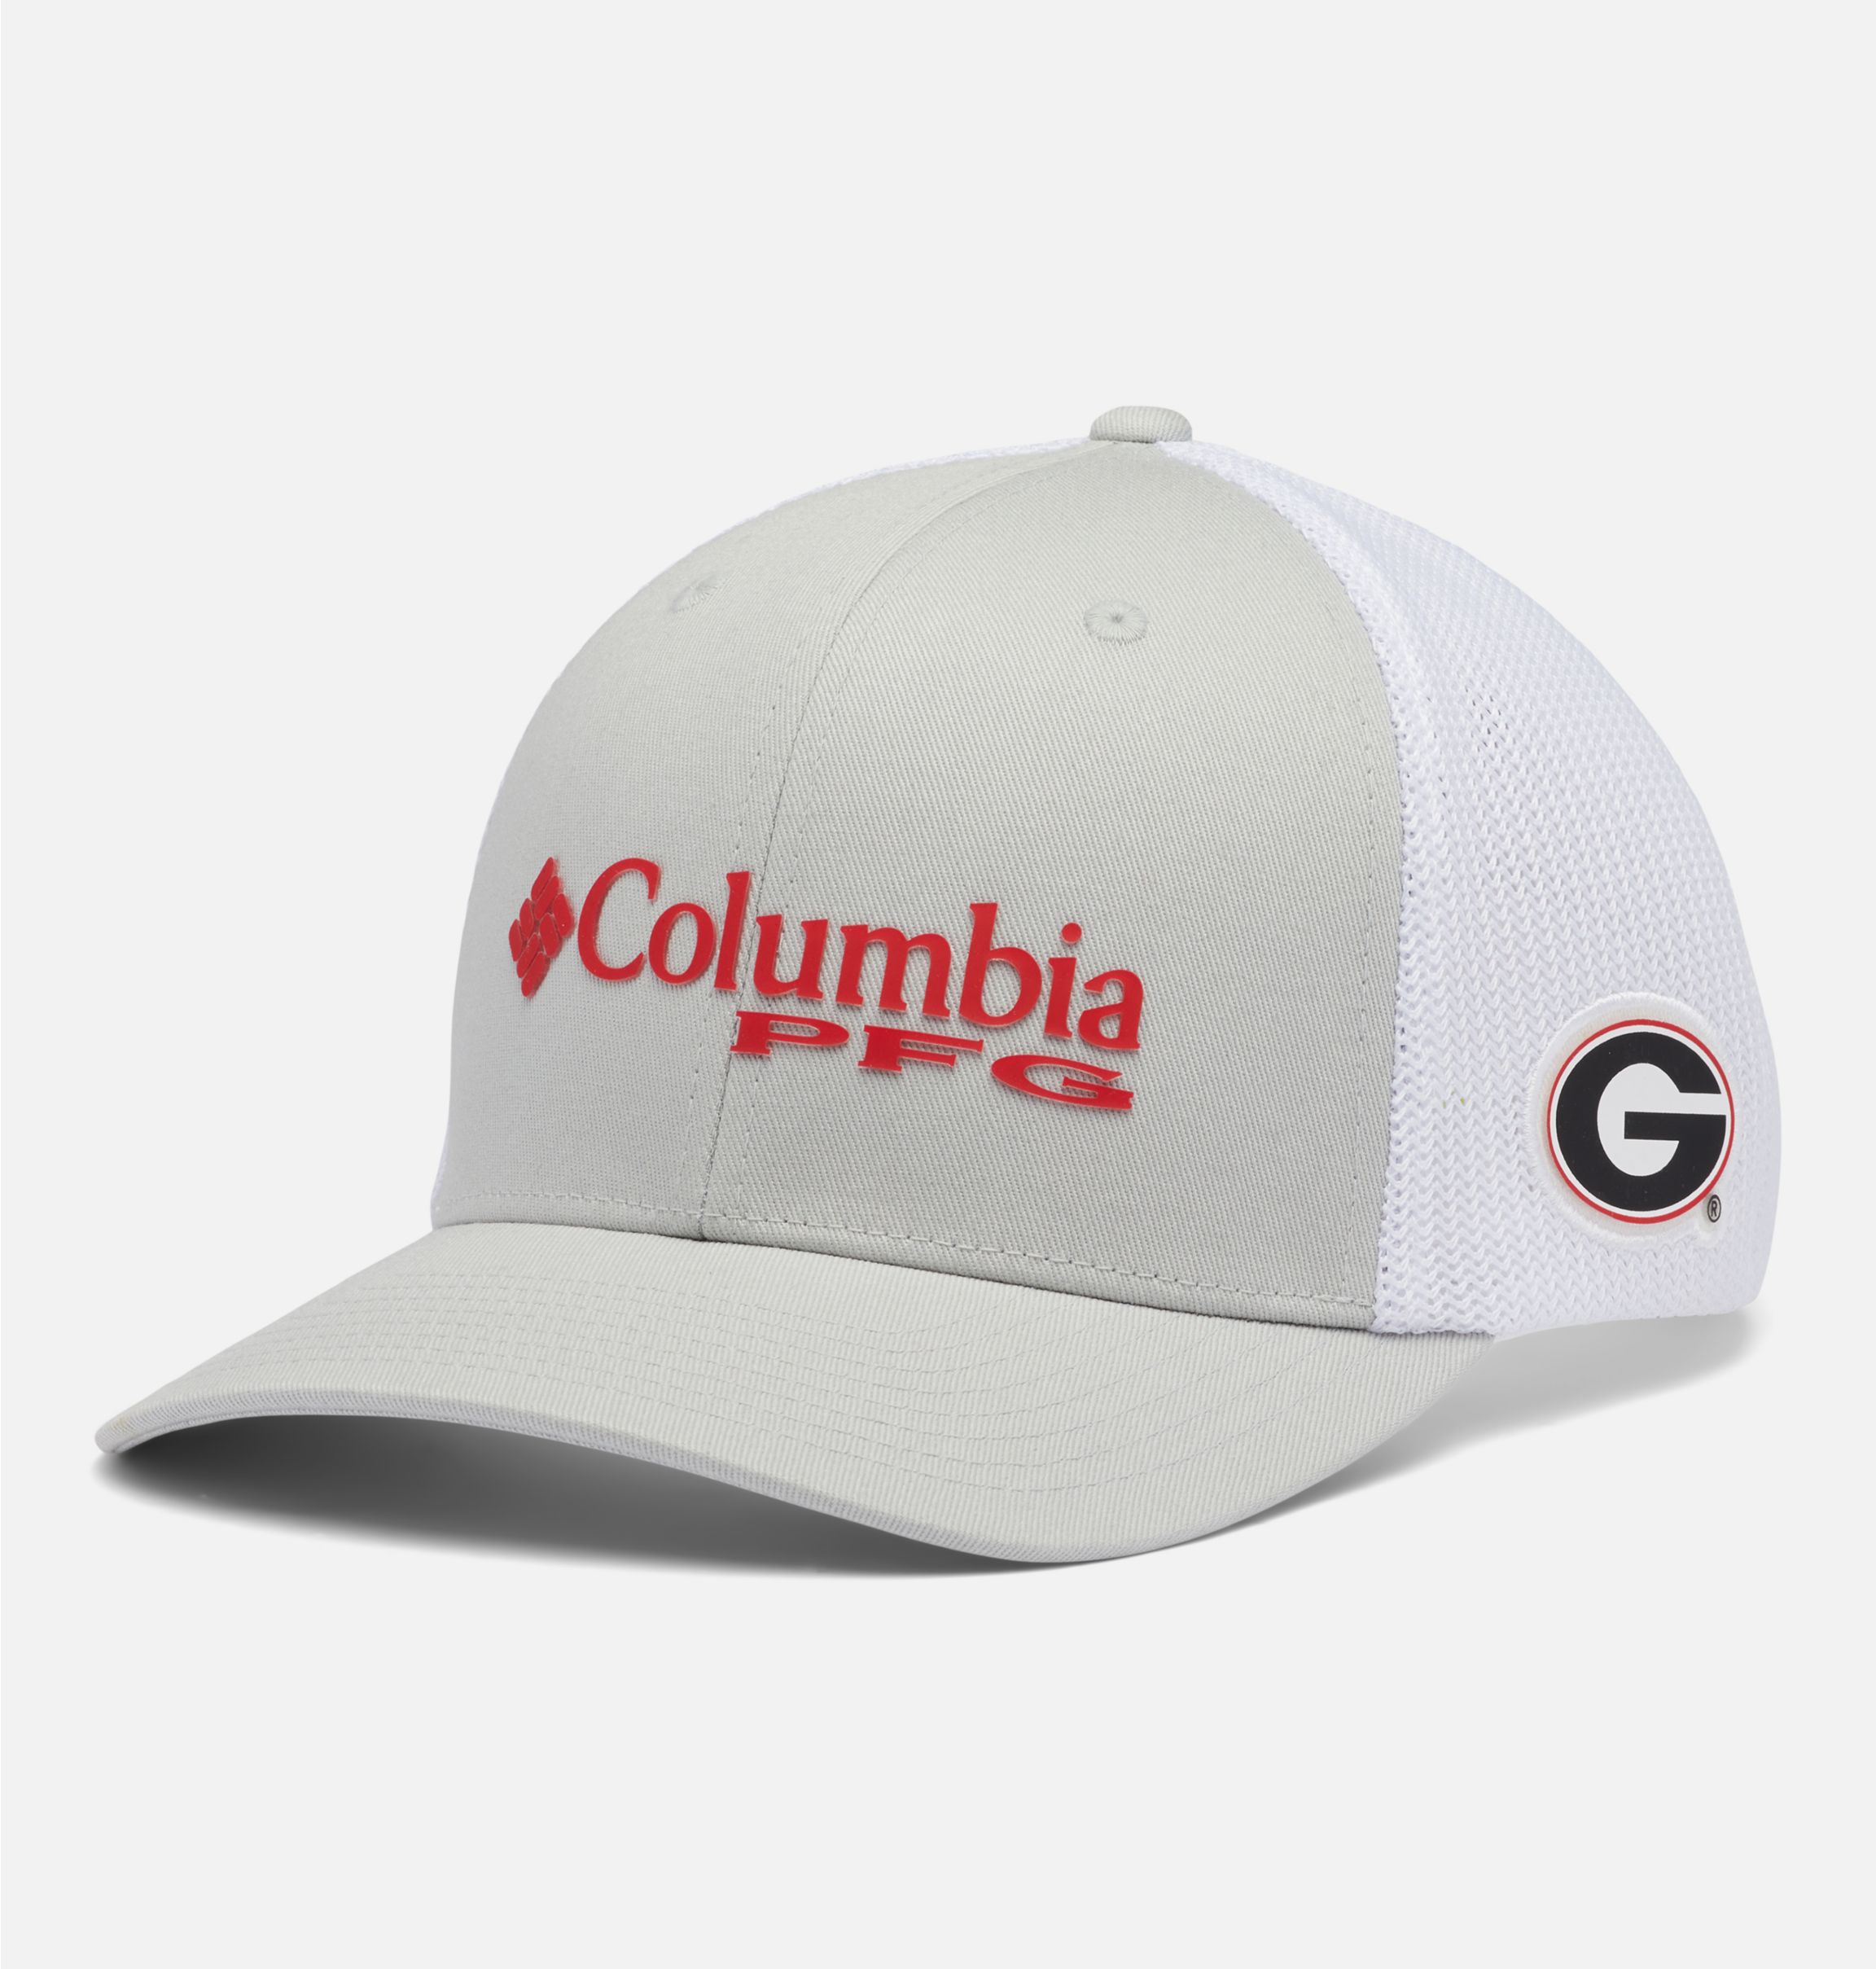 Columbia PFG Mesh Fish Flag Ball Cap - Georgia - S/M - Black